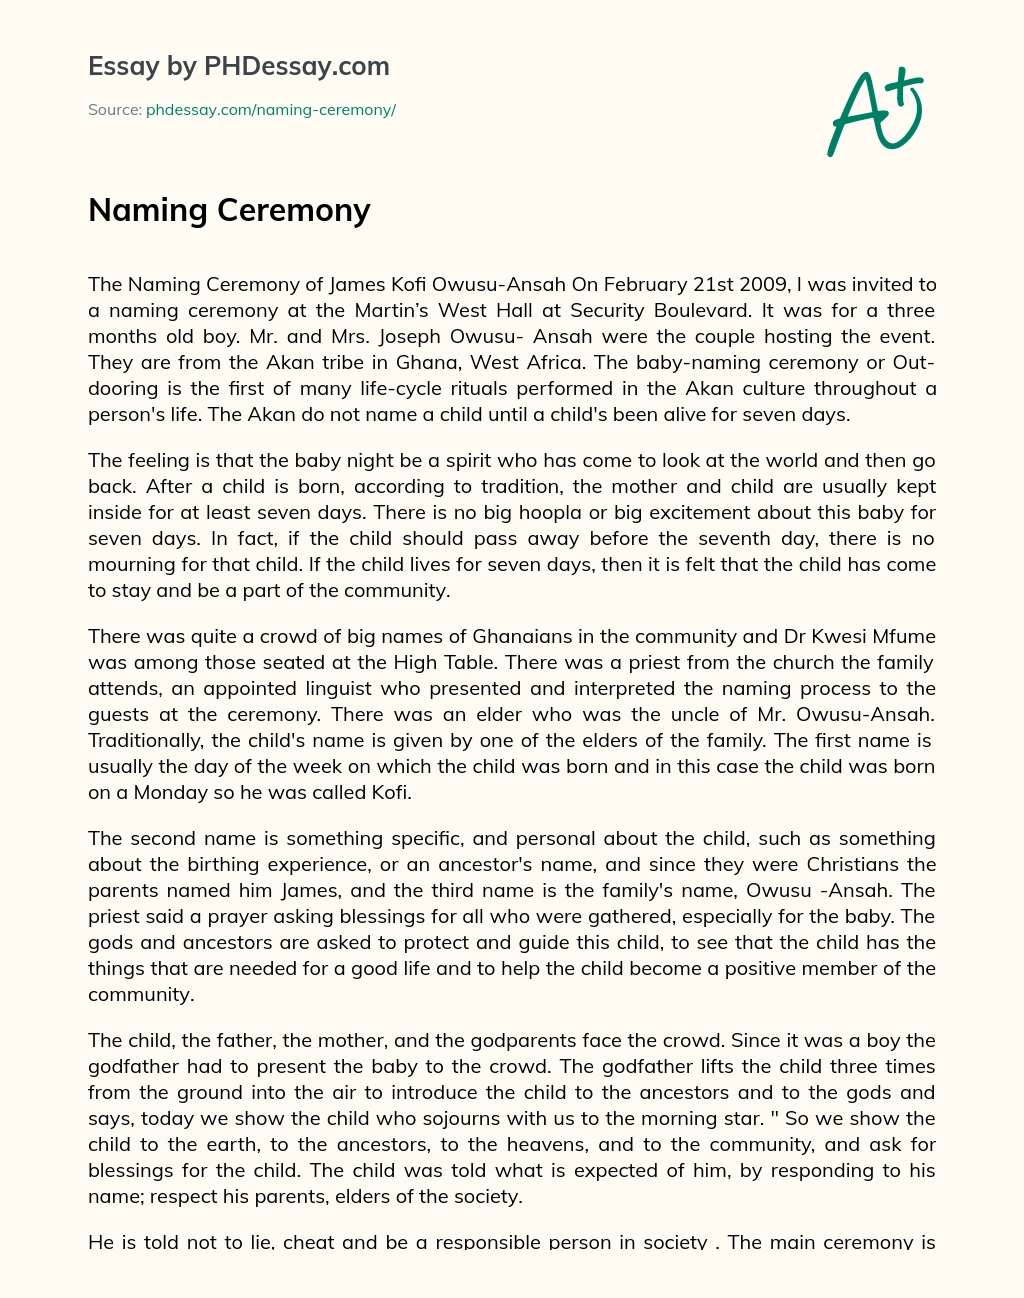 Naming Ceremony essay